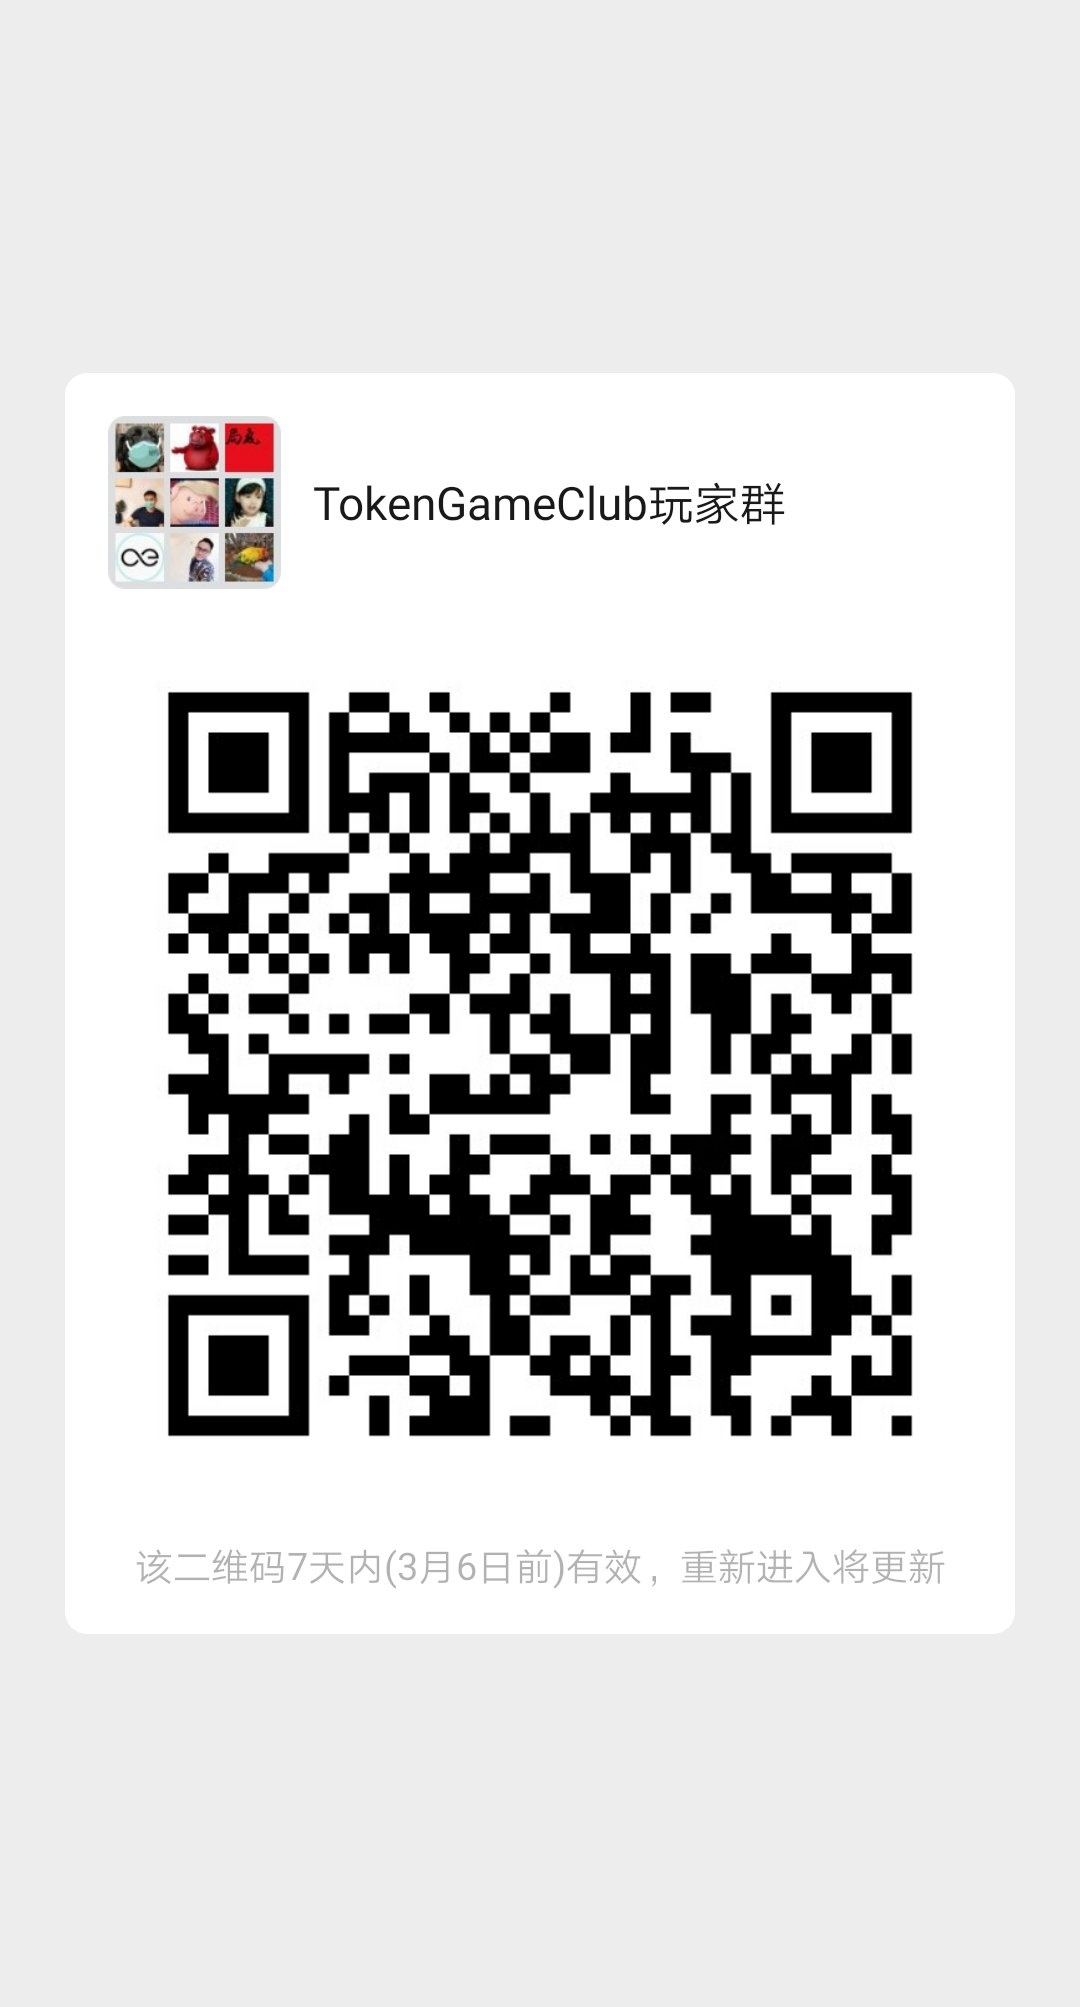 TokenGameClub玩家群第一期招募通知